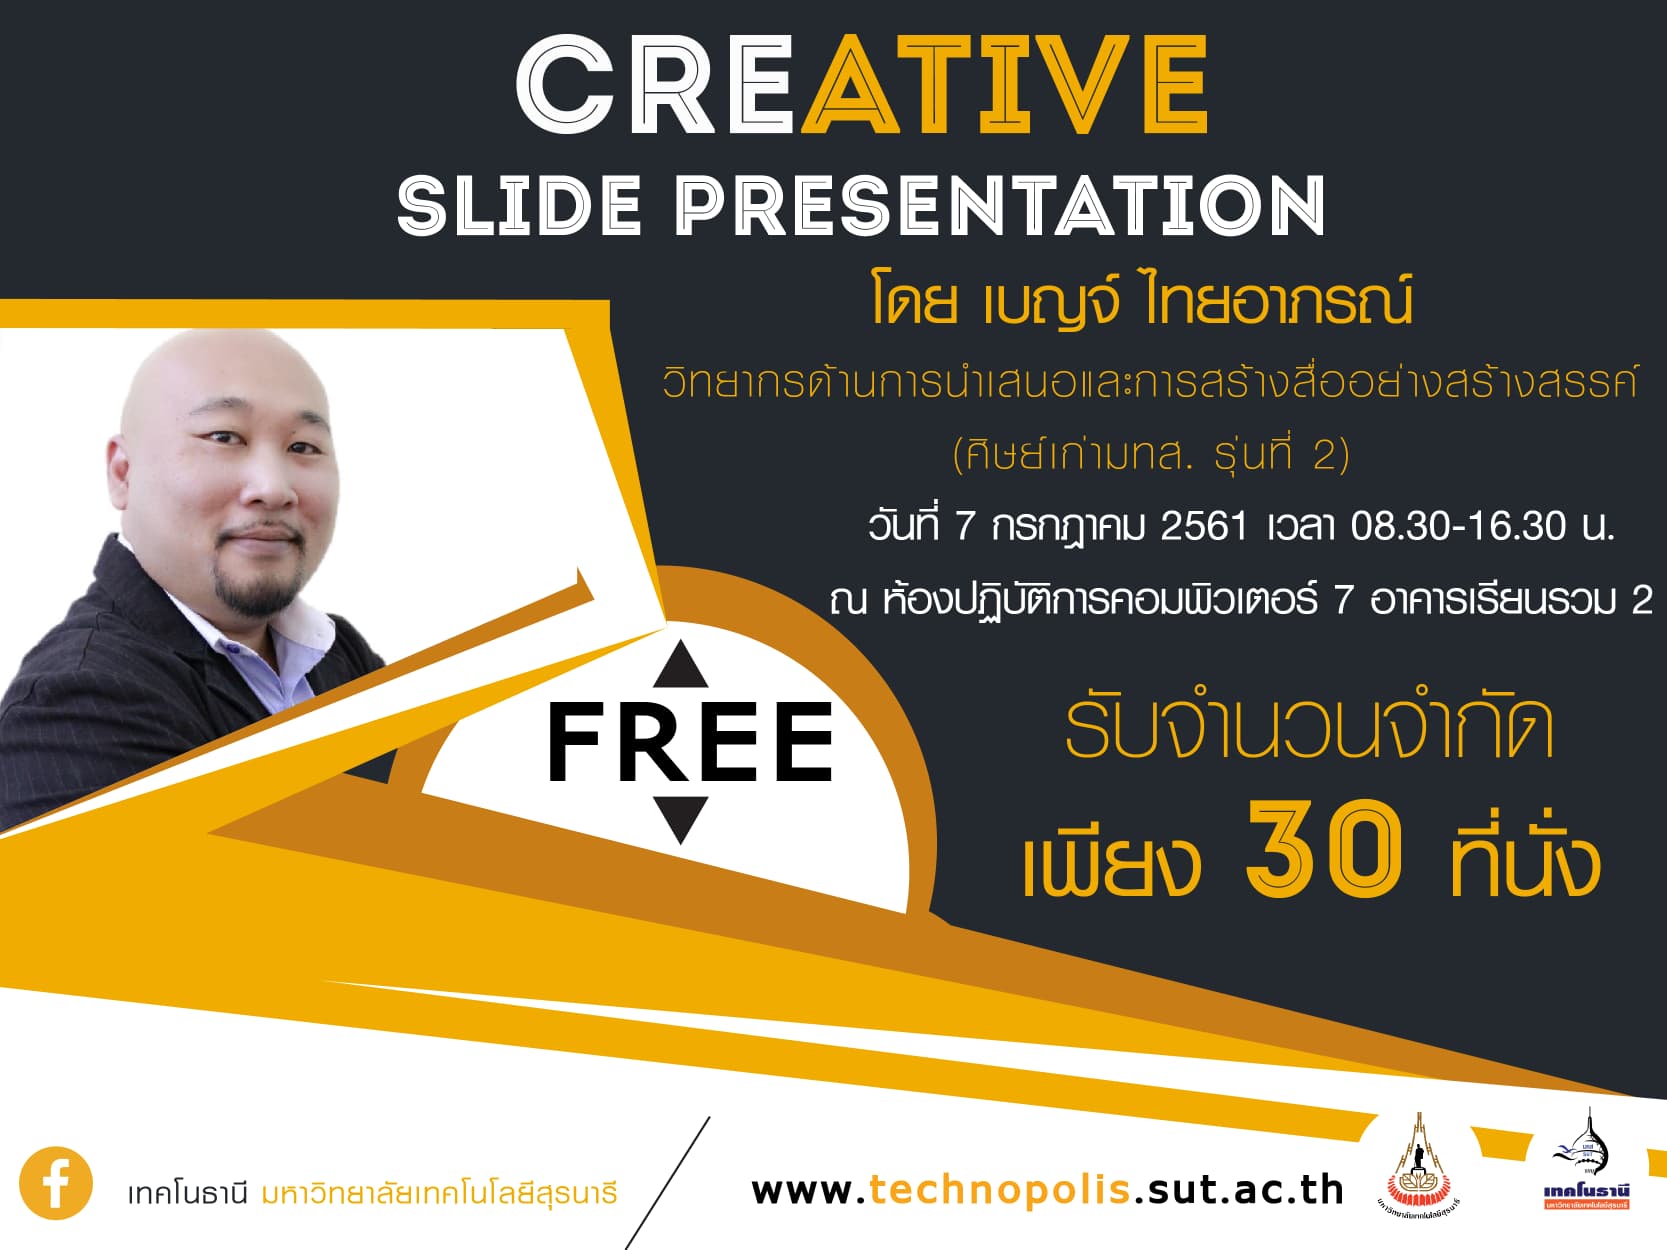 Creative slide presentation